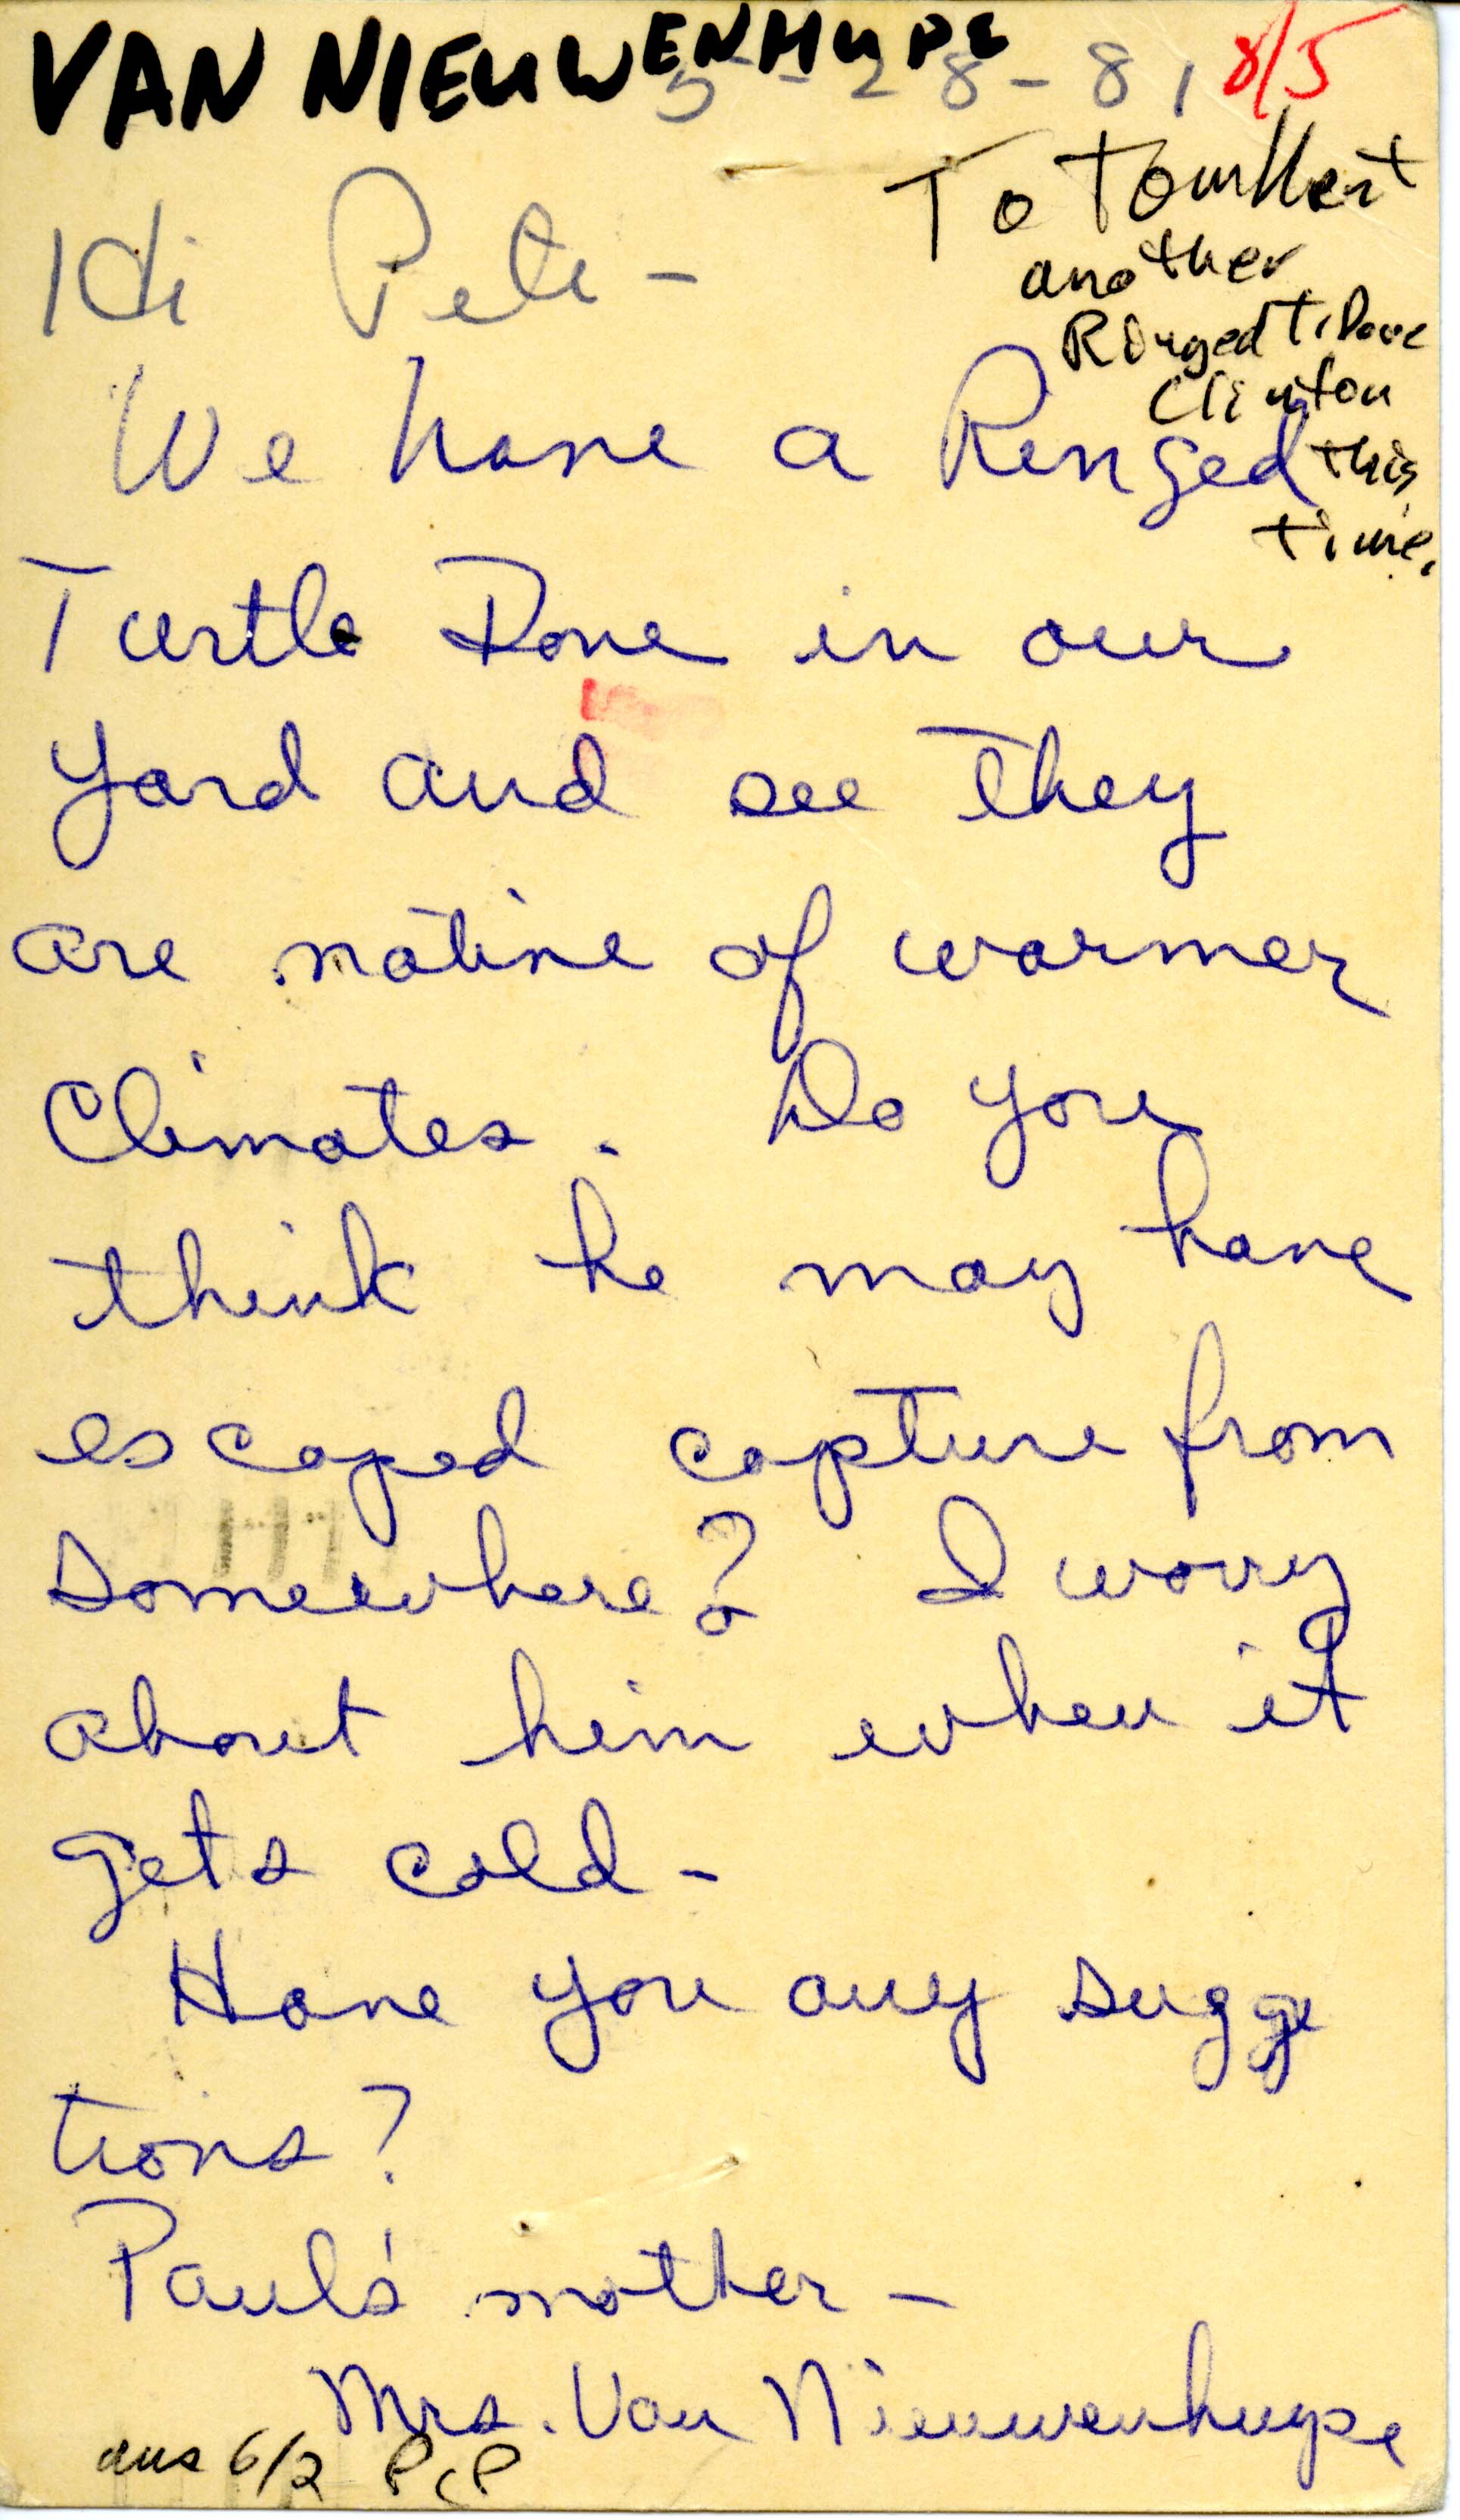 Irene Van Nieuwenhuyse letter to Peter C. Petersen regarding a Ringed Turtle-Dove sighting, May 28, 1981